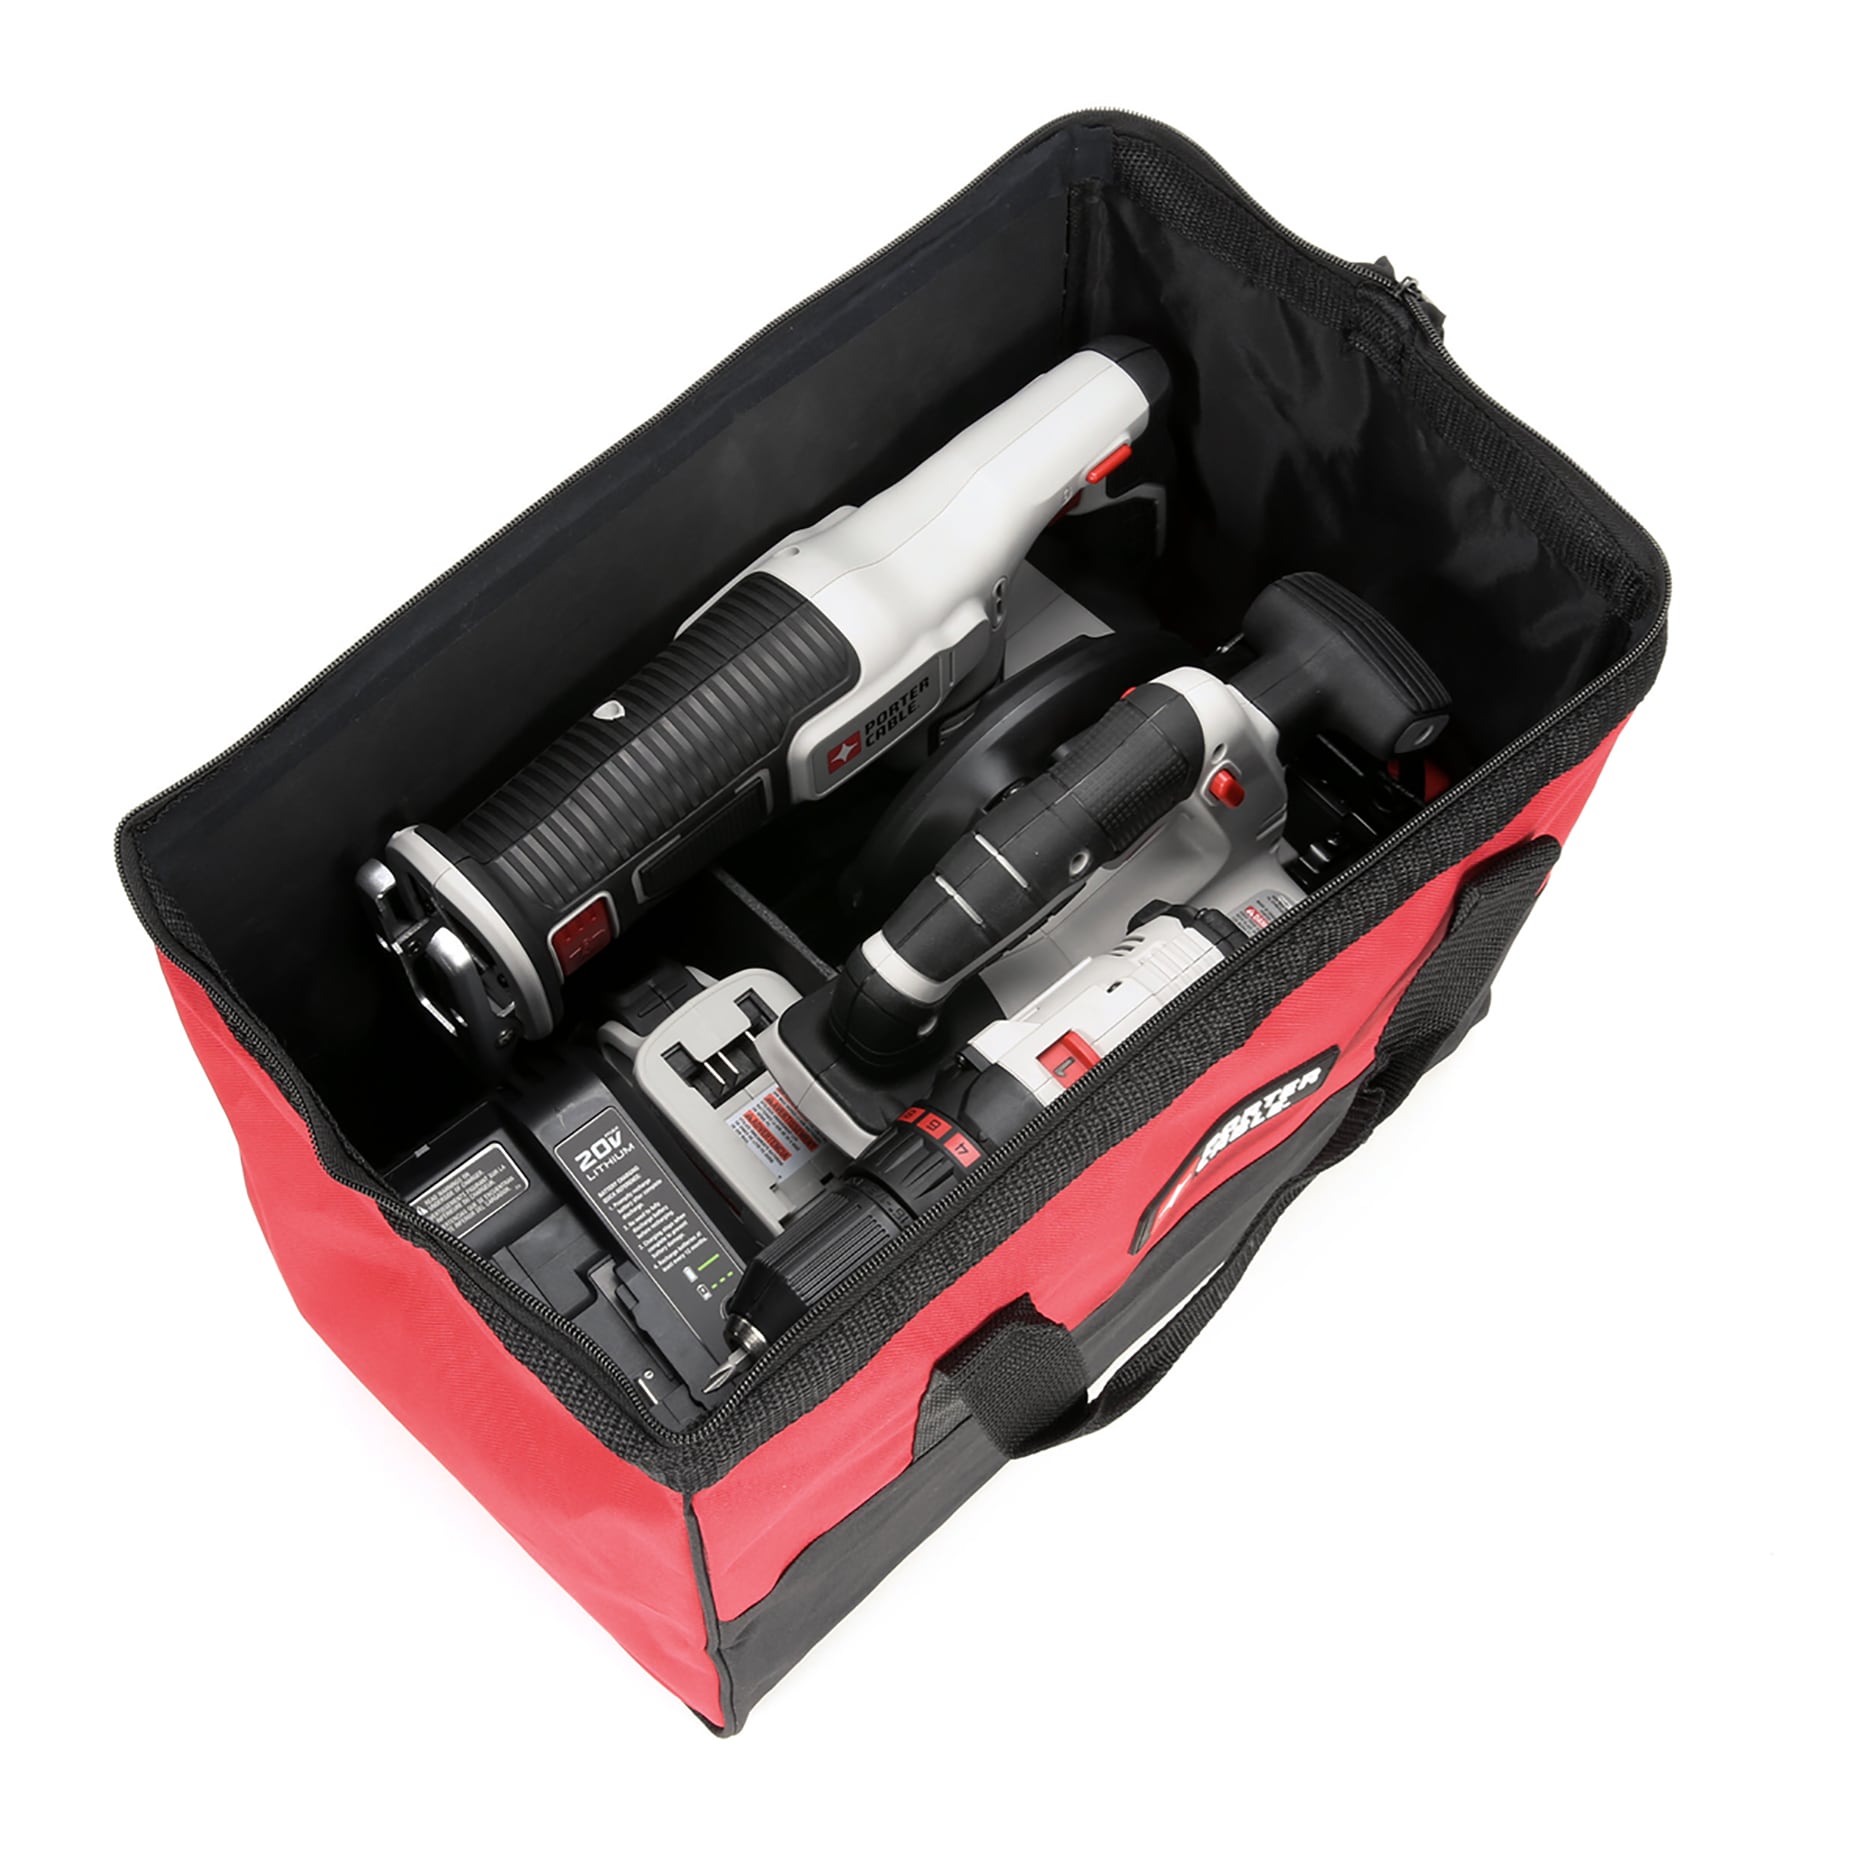 PORTER-CABLE Cordless Drill Combo Kit Power Tool, 4-Tool (PCCK616L4) 